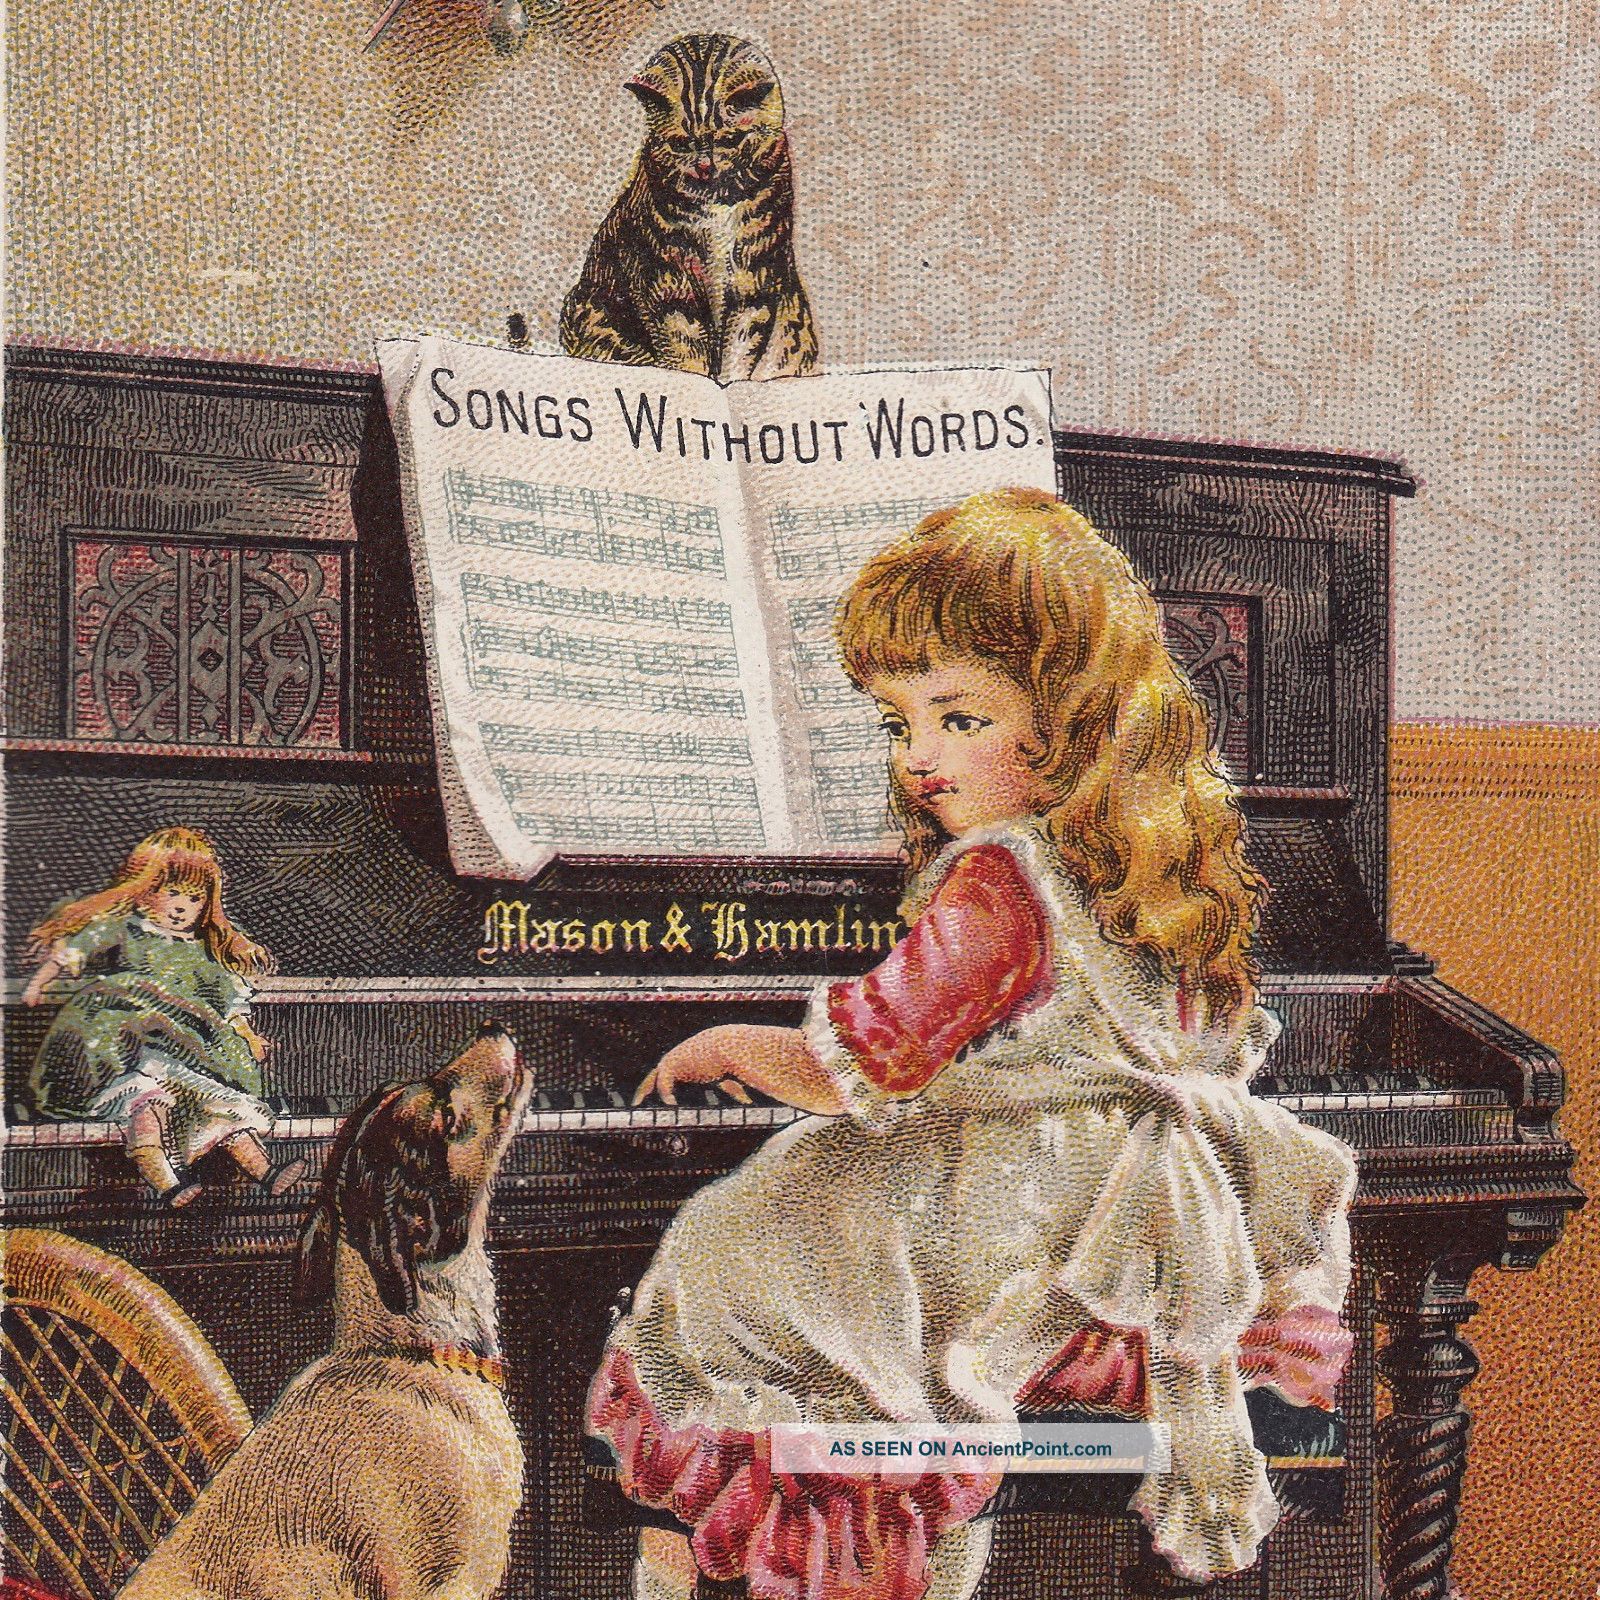 Hollowville Ny Mason & Hamlin Piano Organ Dog Cat Old Victorian Advertising Card Keyboard photo